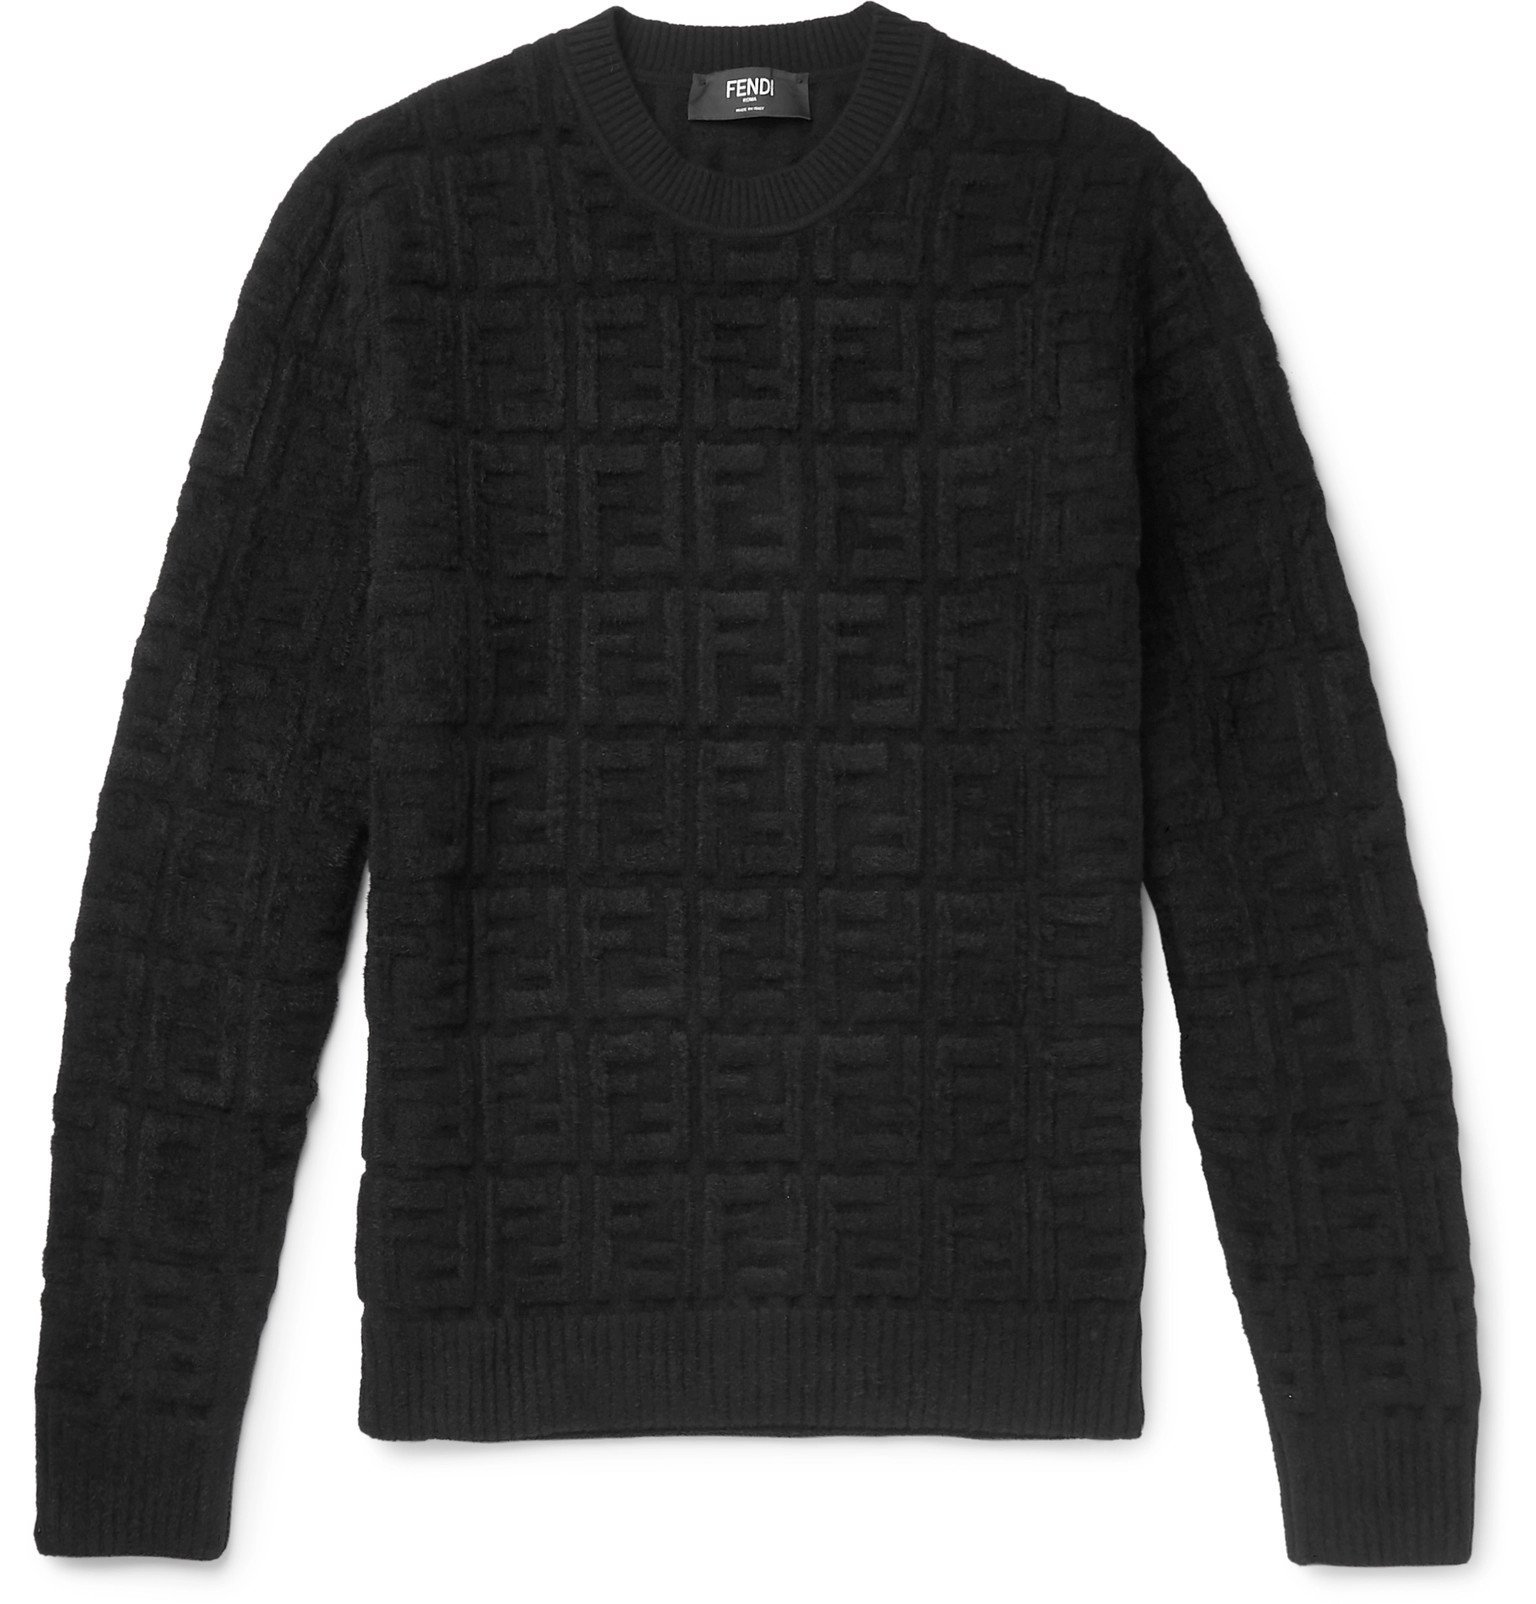 fendi sweater black